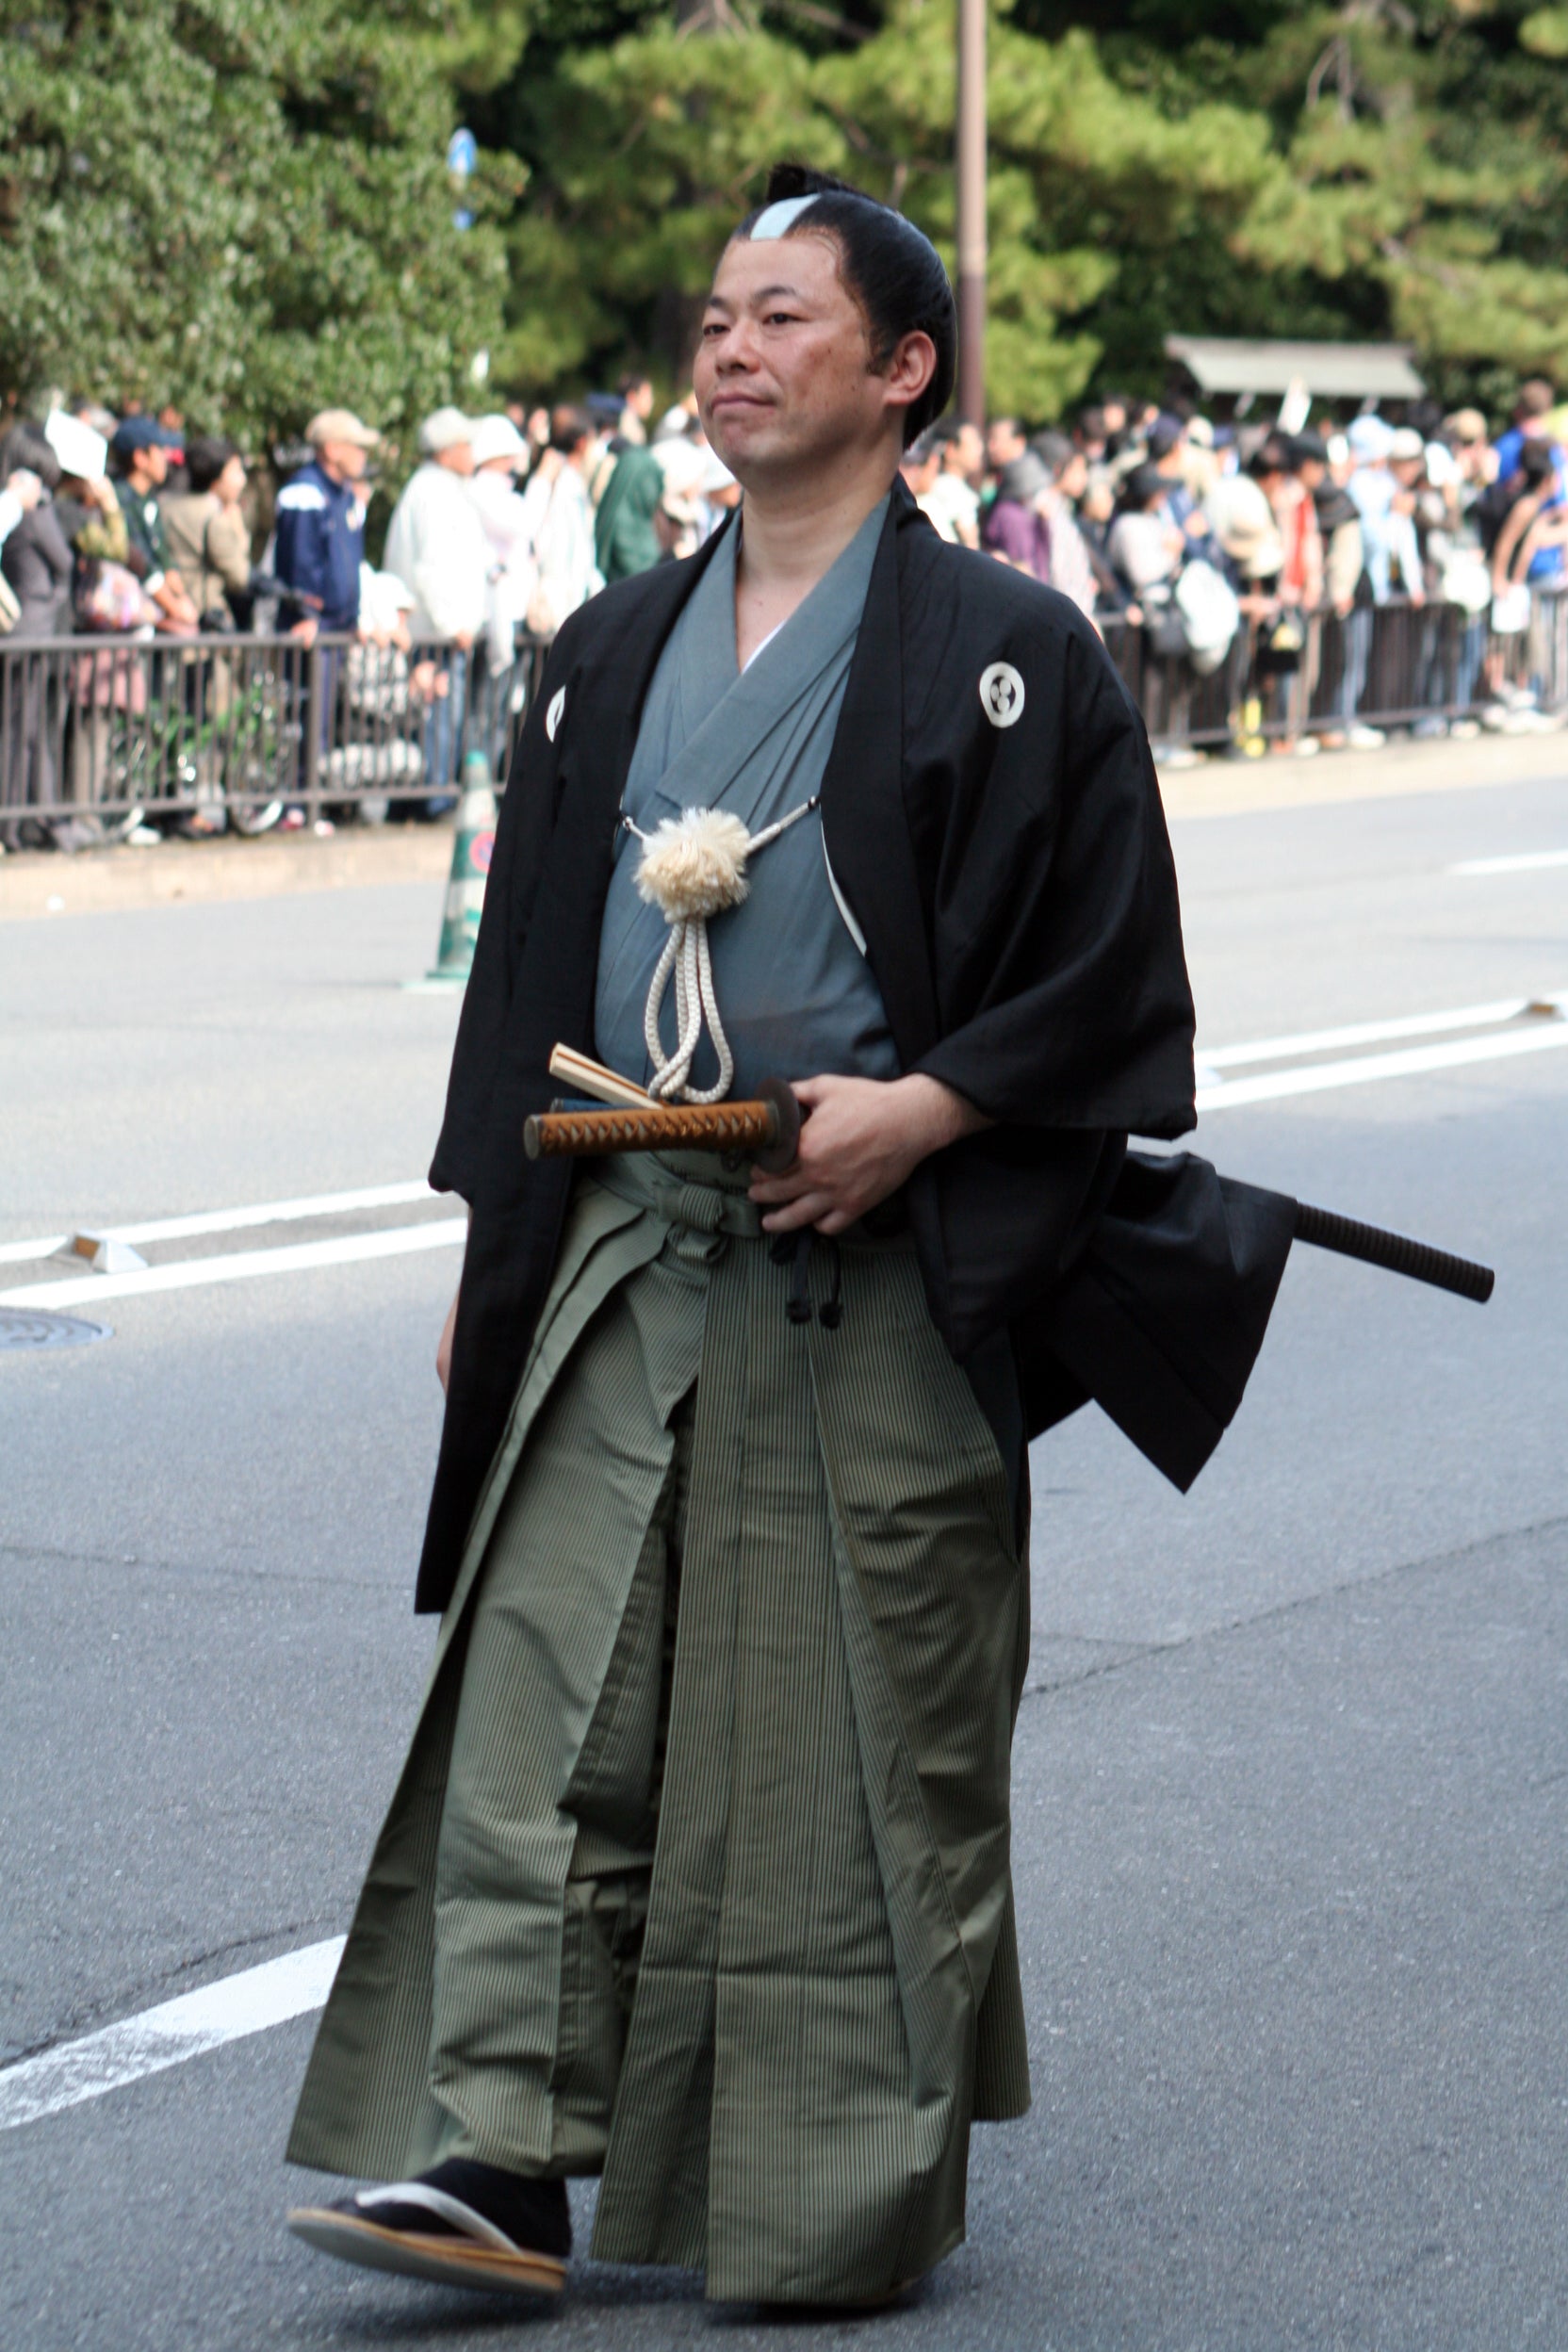 Men's Kimono  Japanese traditional clothing, Japanese outfits